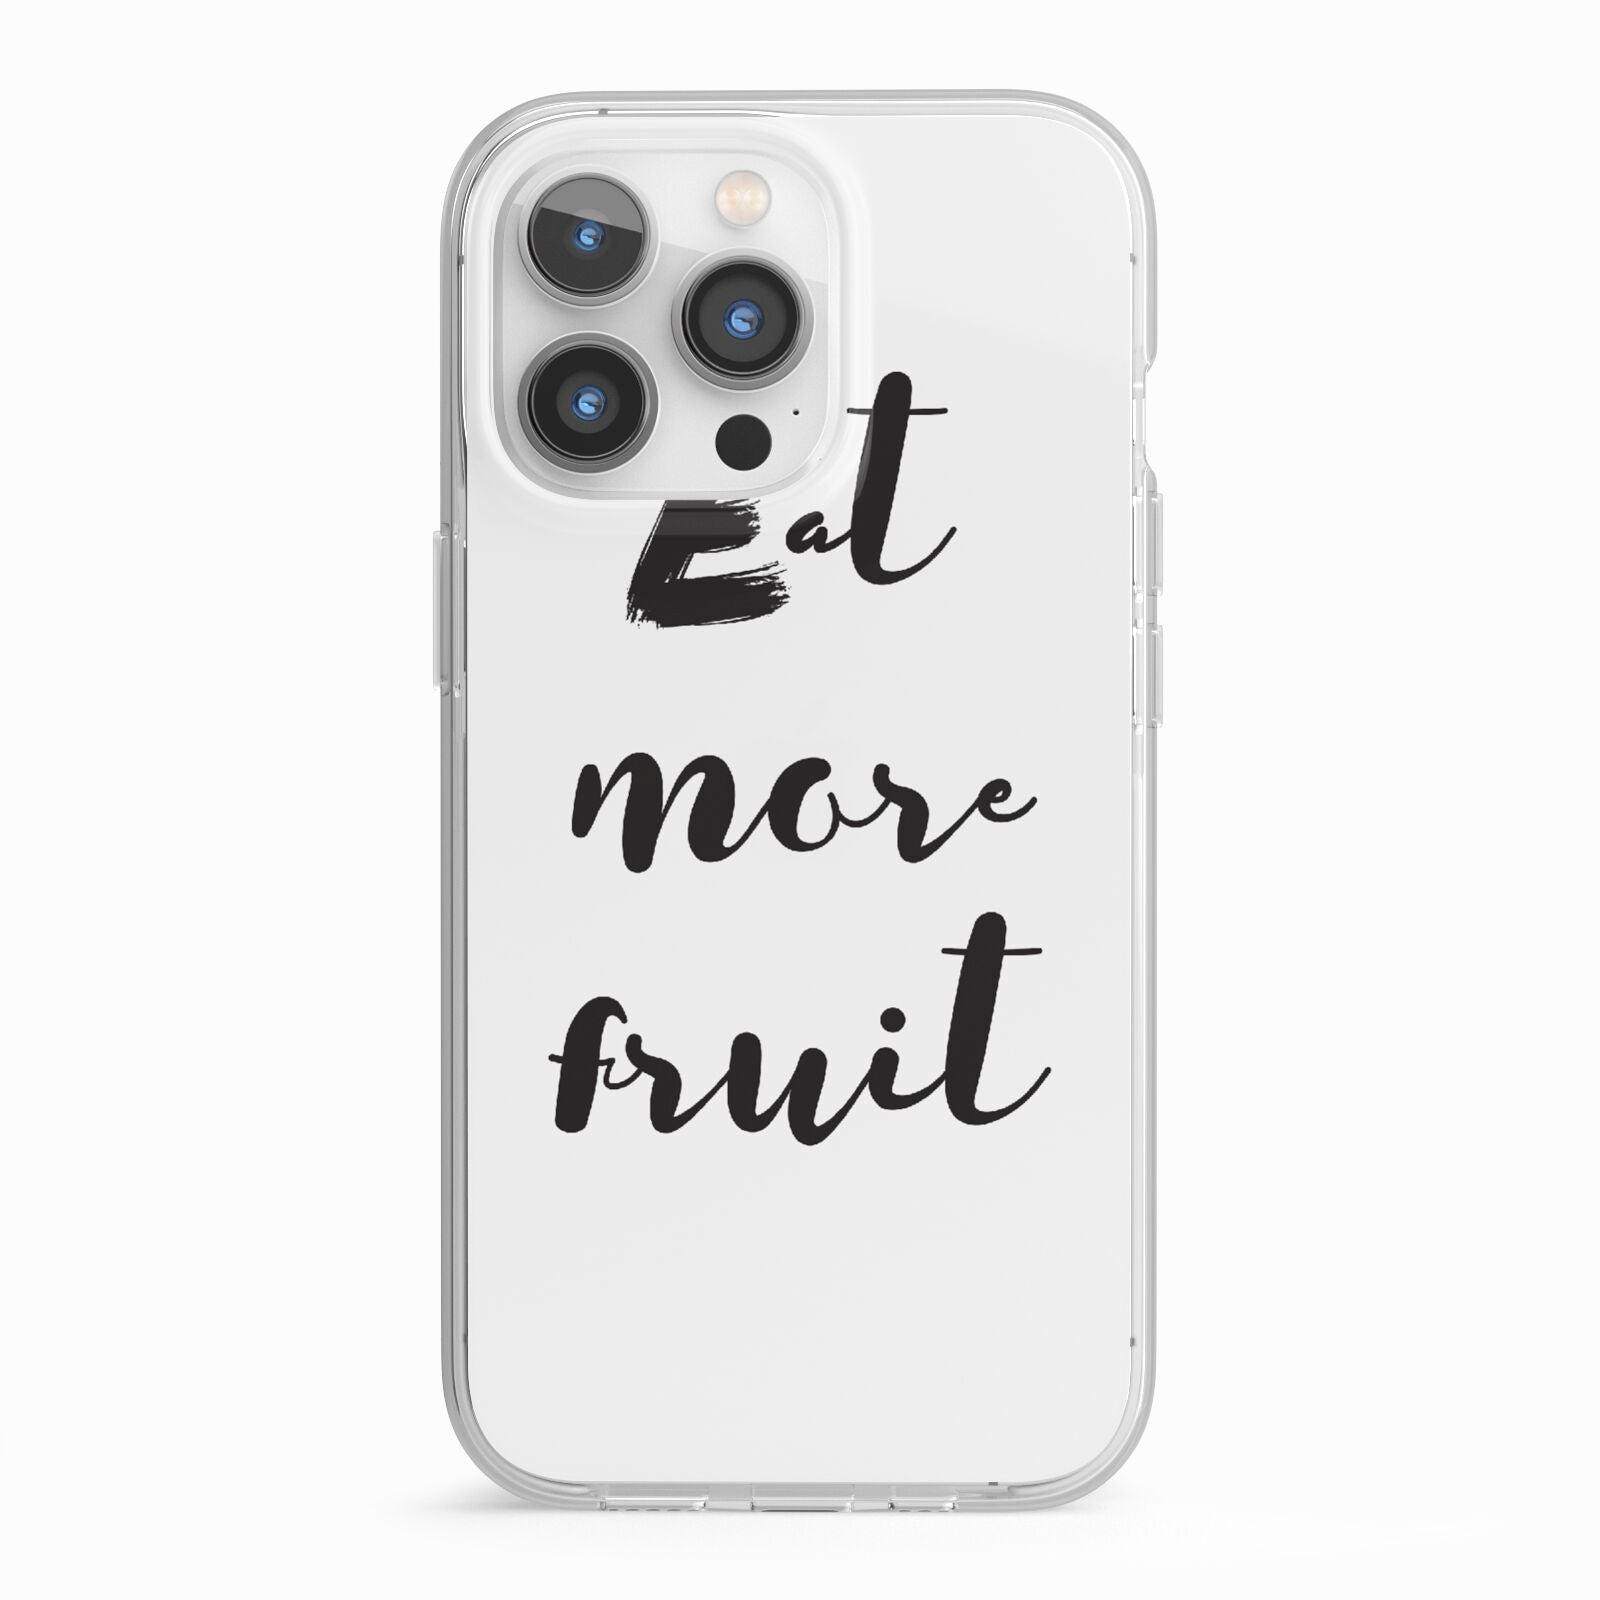 Eat More Fruit iPhone 13 Pro TPU Impact Case with White Edges